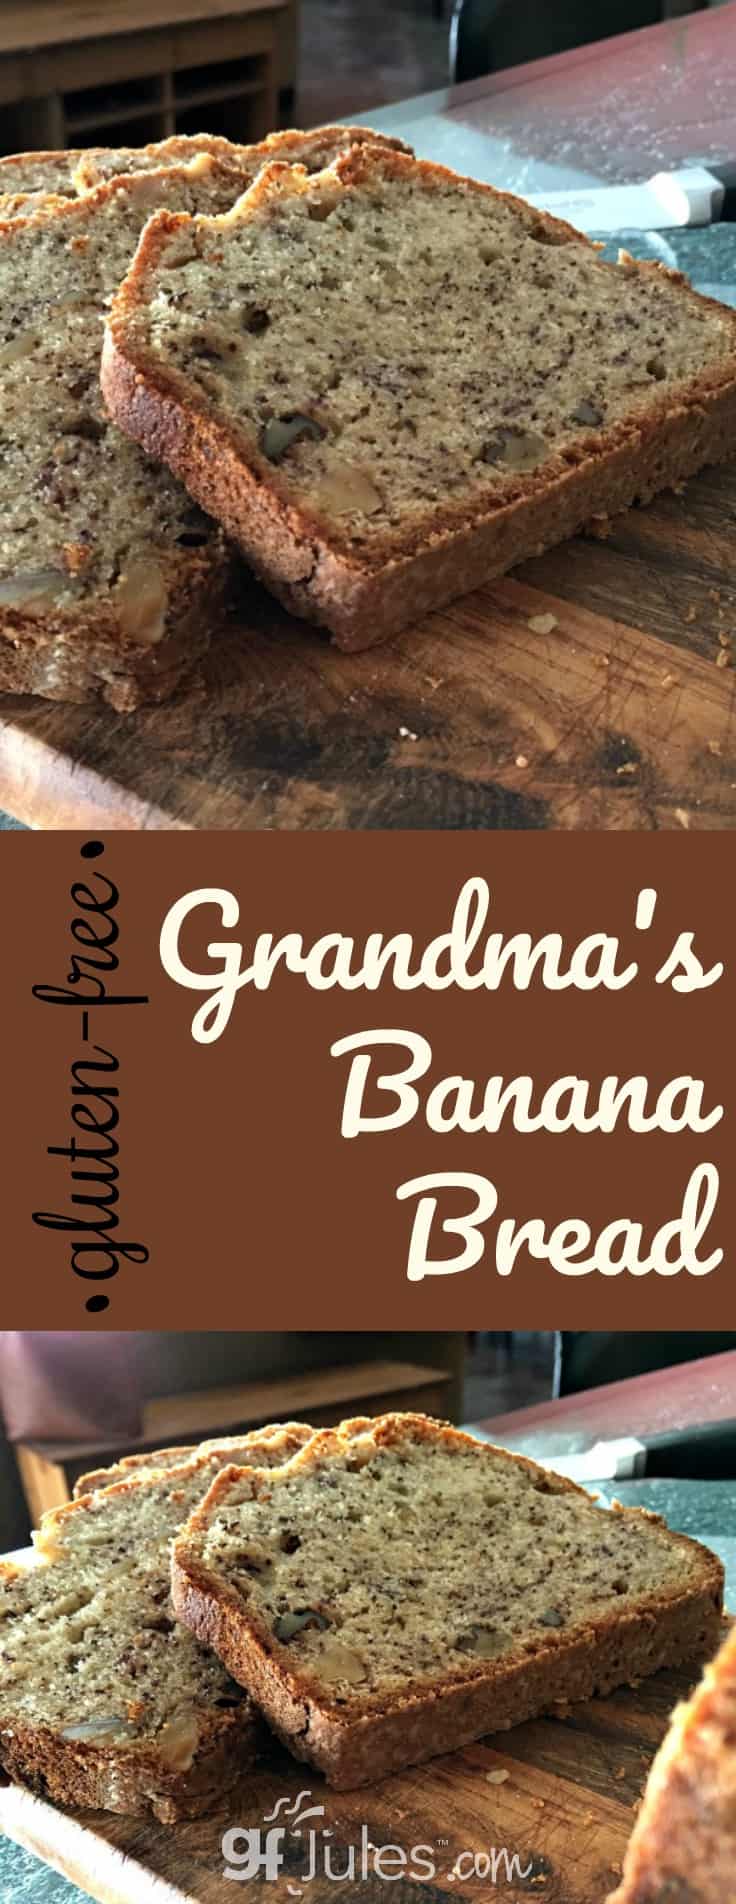 Grandma's Banana Bread ... made Gluten Free! gfJules.com - Gluten free ...